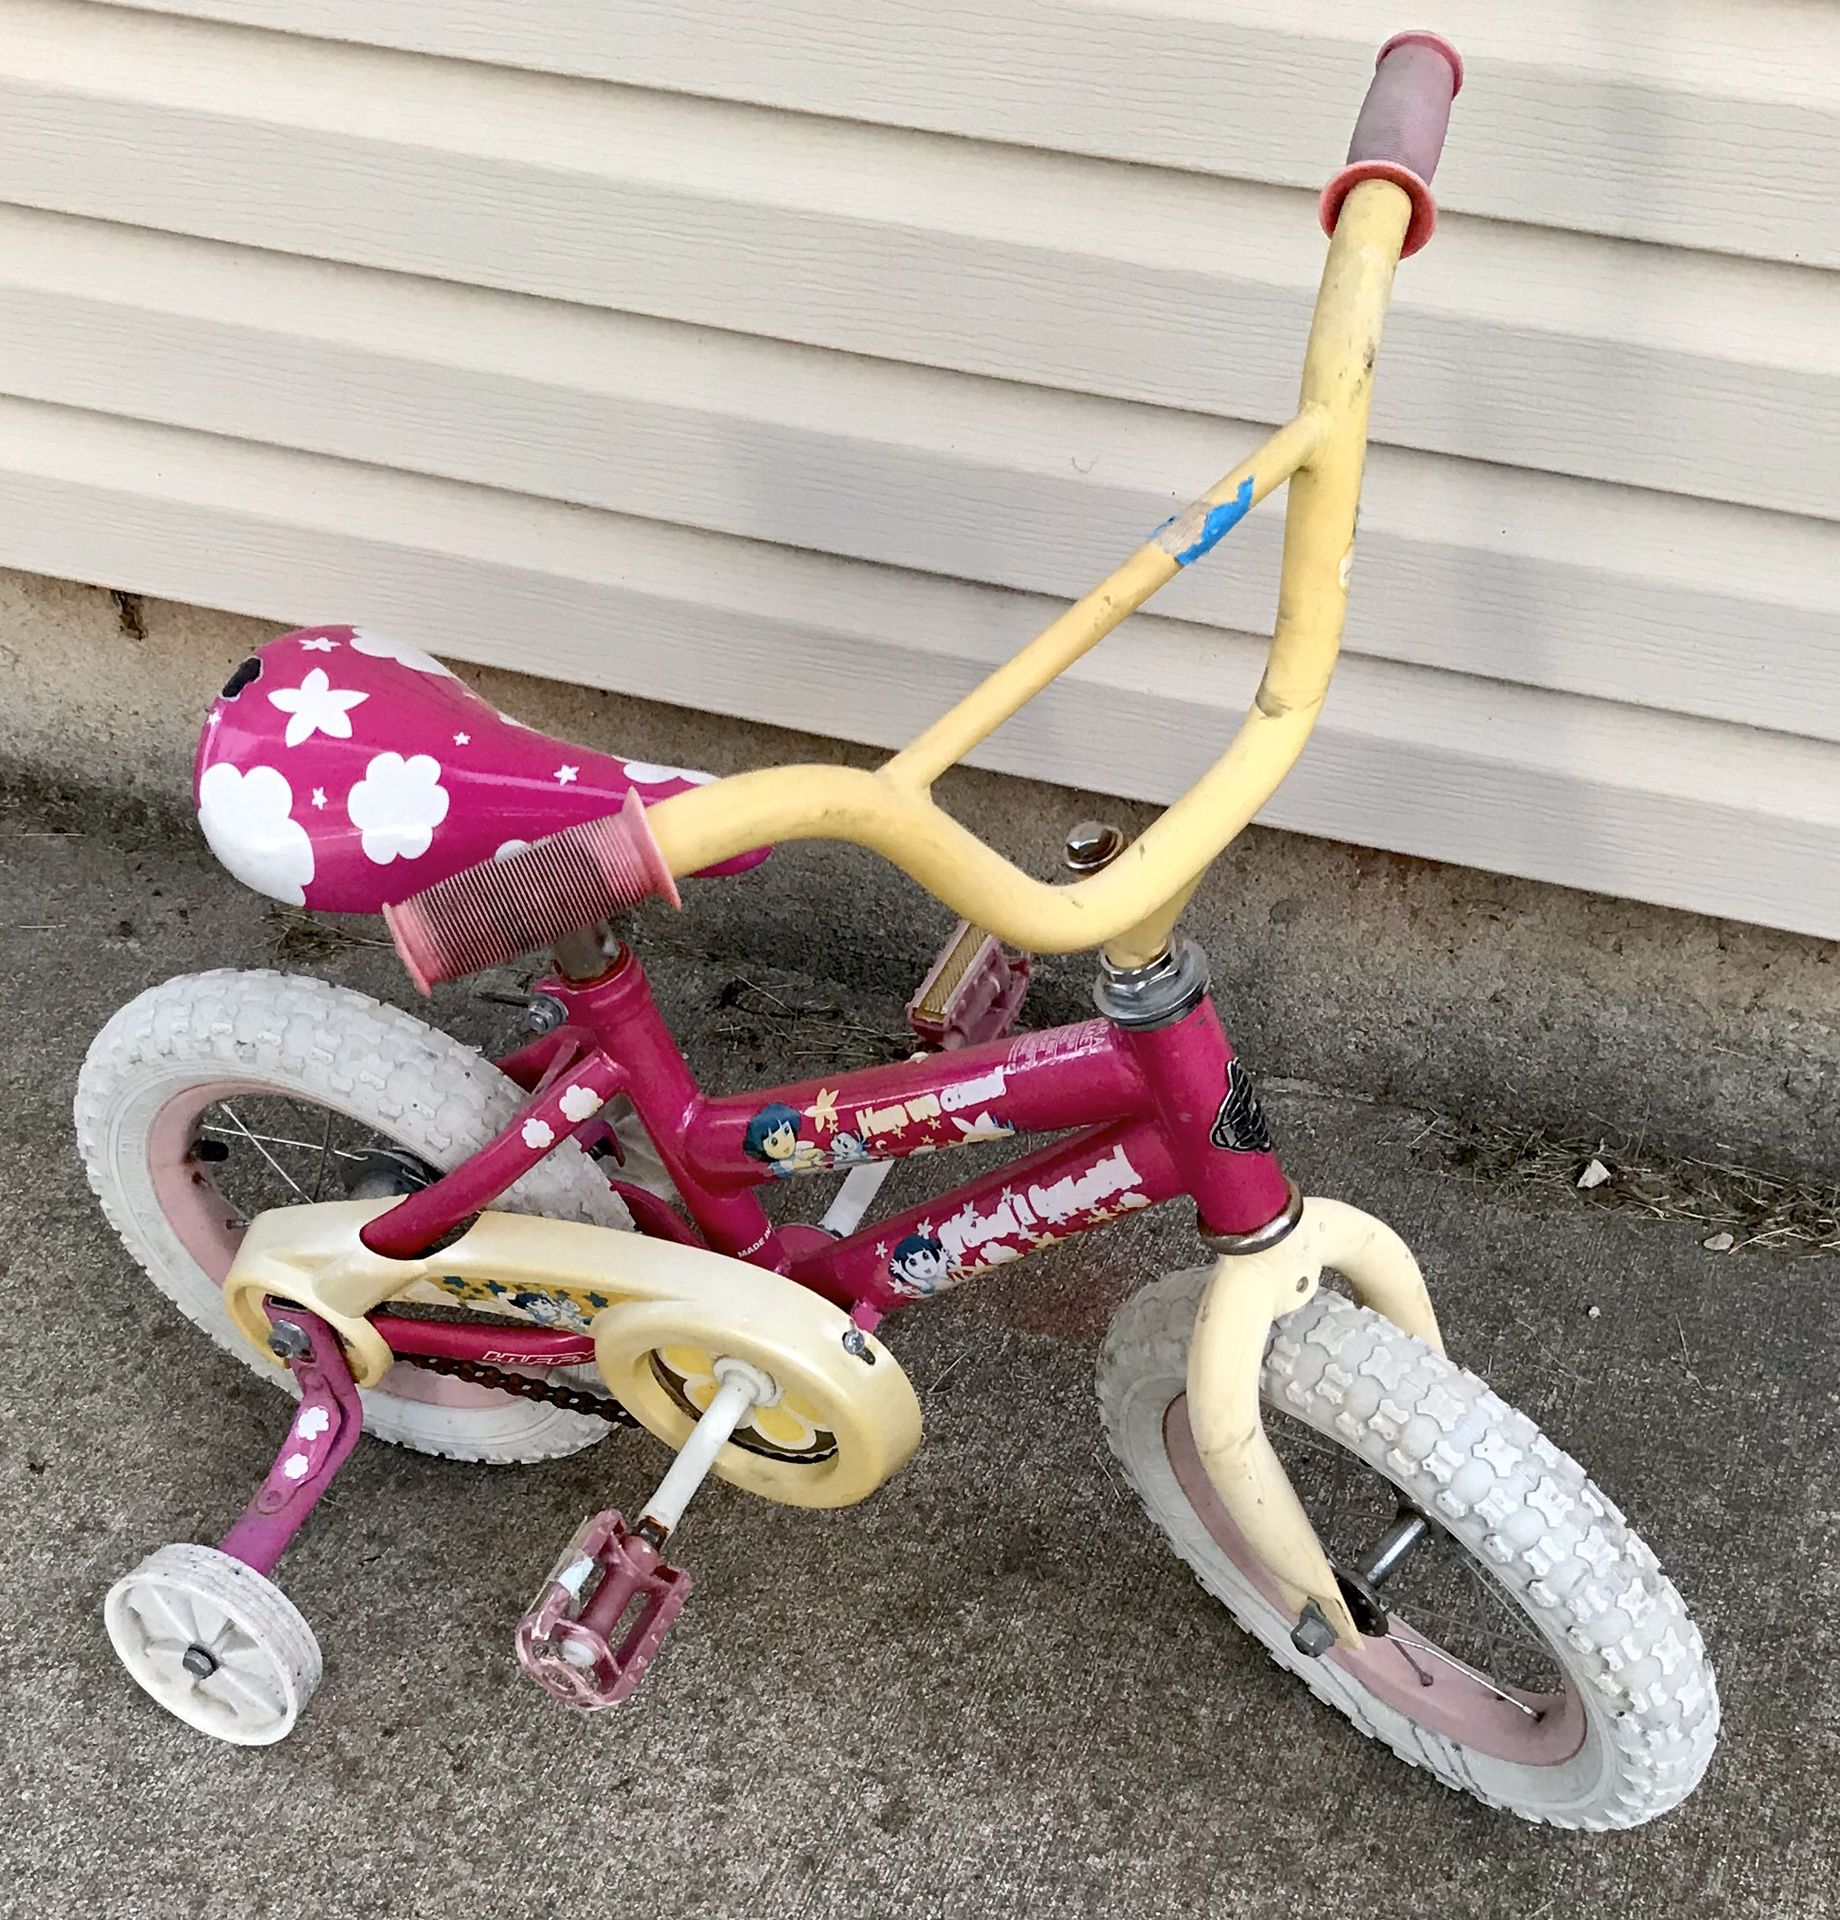 Huffy 12” Dora the Explorer Bike with Training Wheels